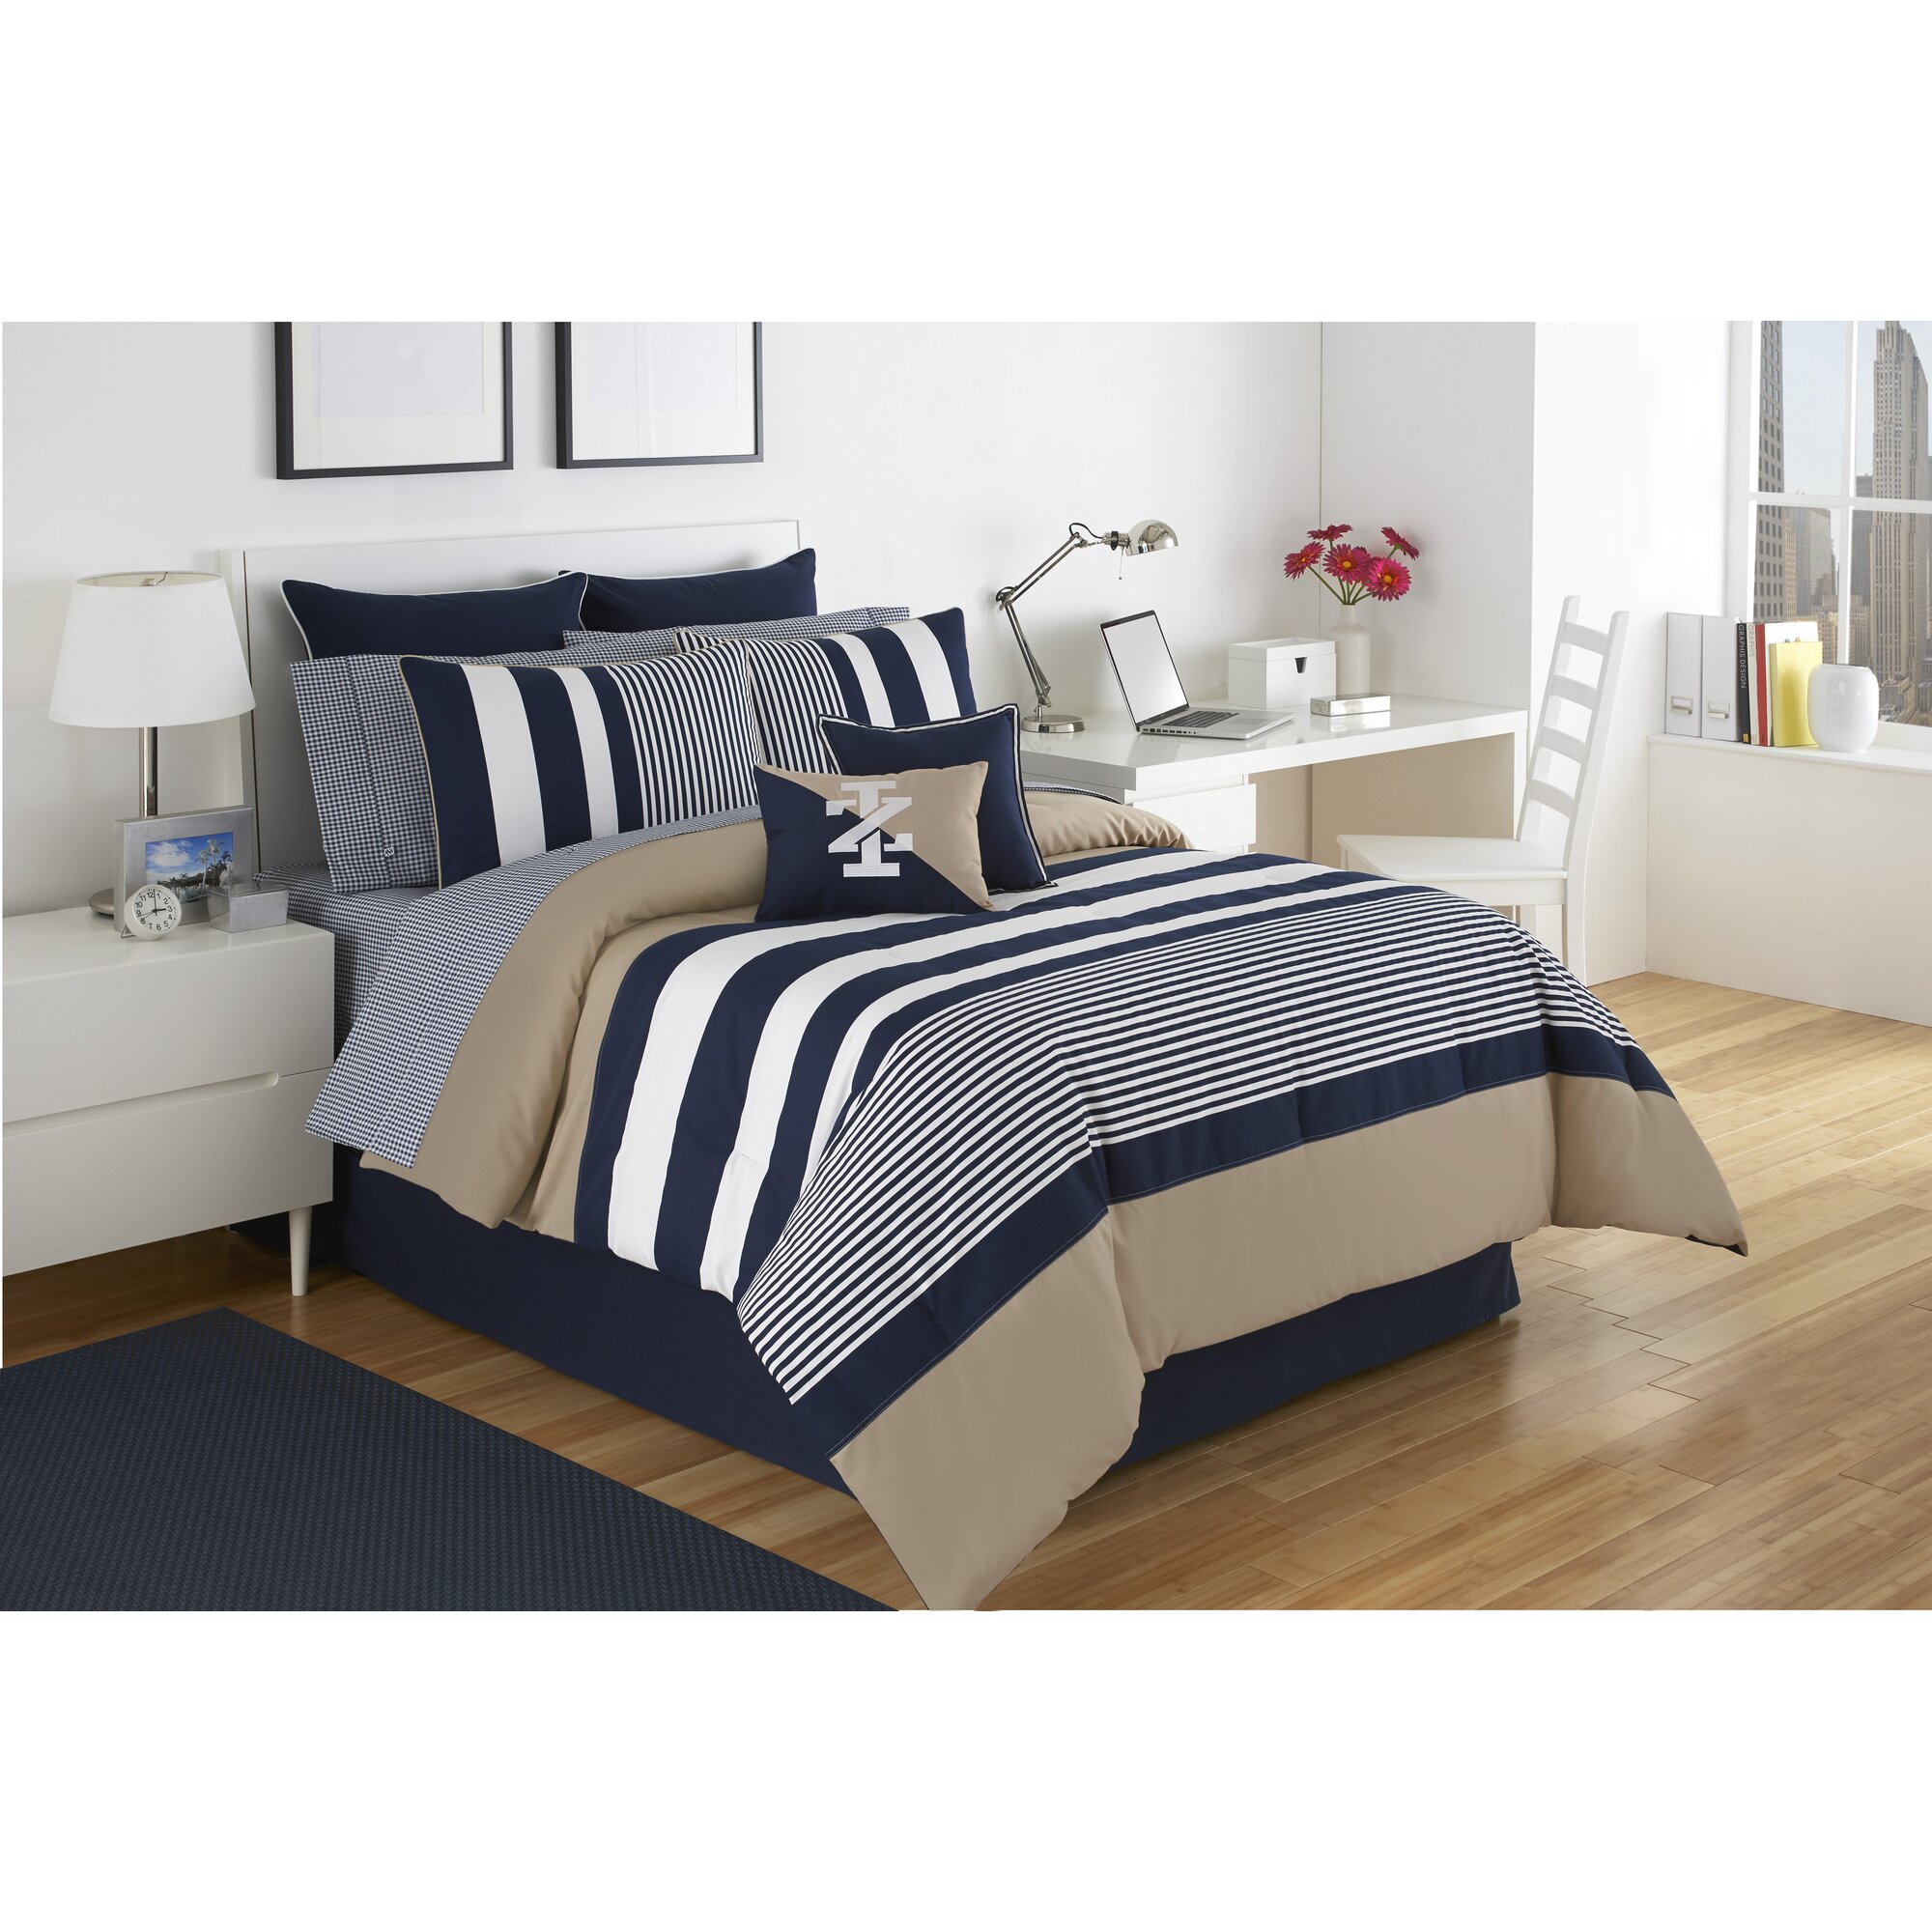 IZOD Classic Stripe Comforter Set & Reviews | Wayfair